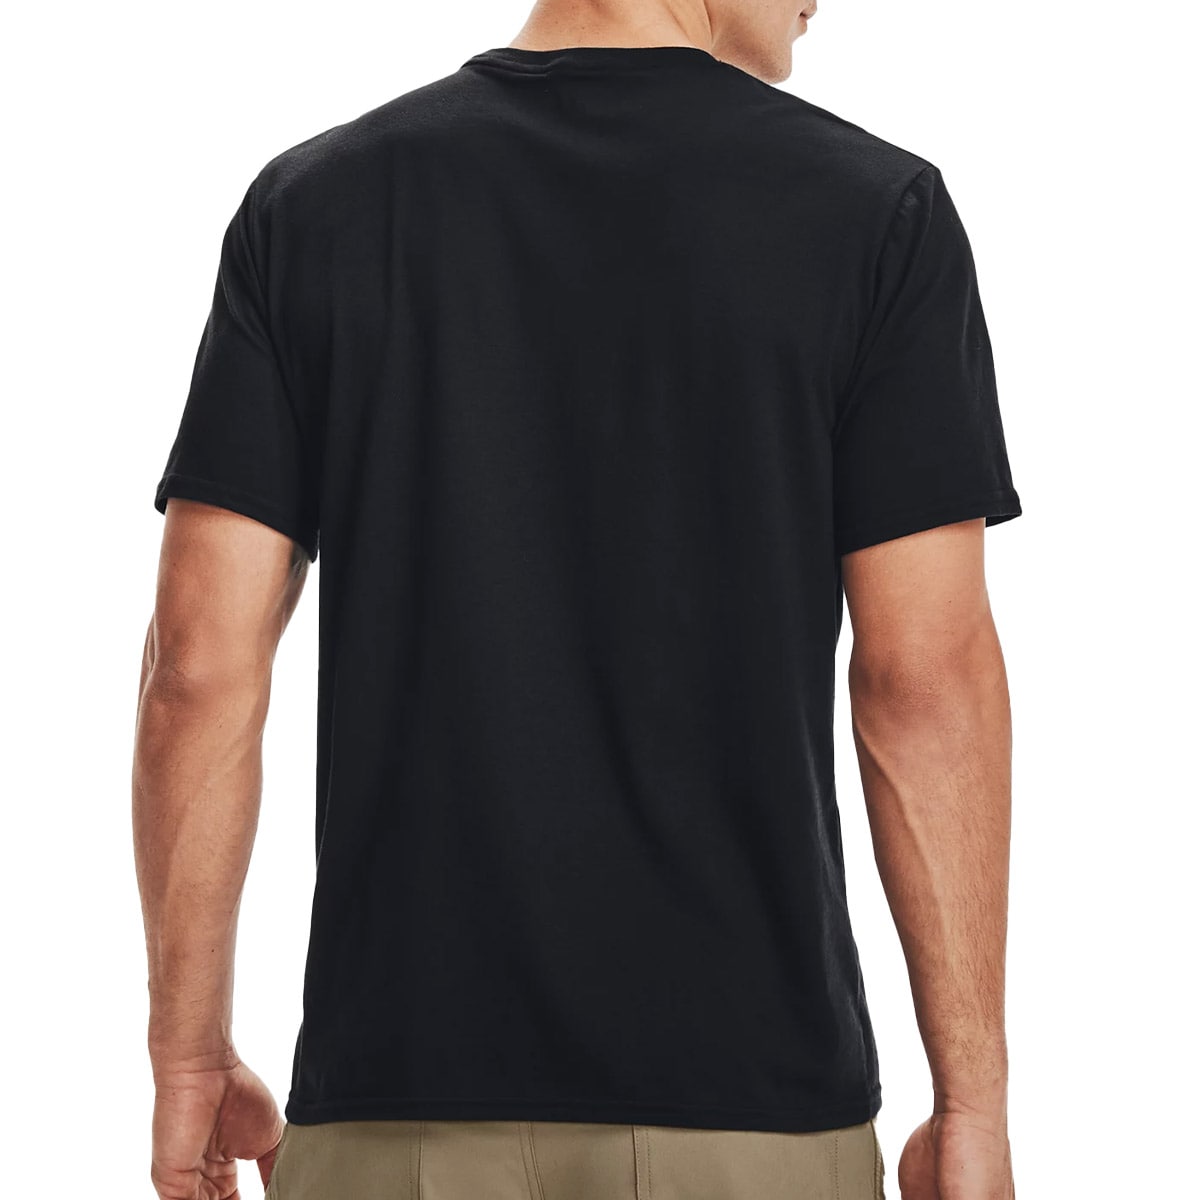 Koszulka T-shirt Under Armour Tactical Cotton - Black